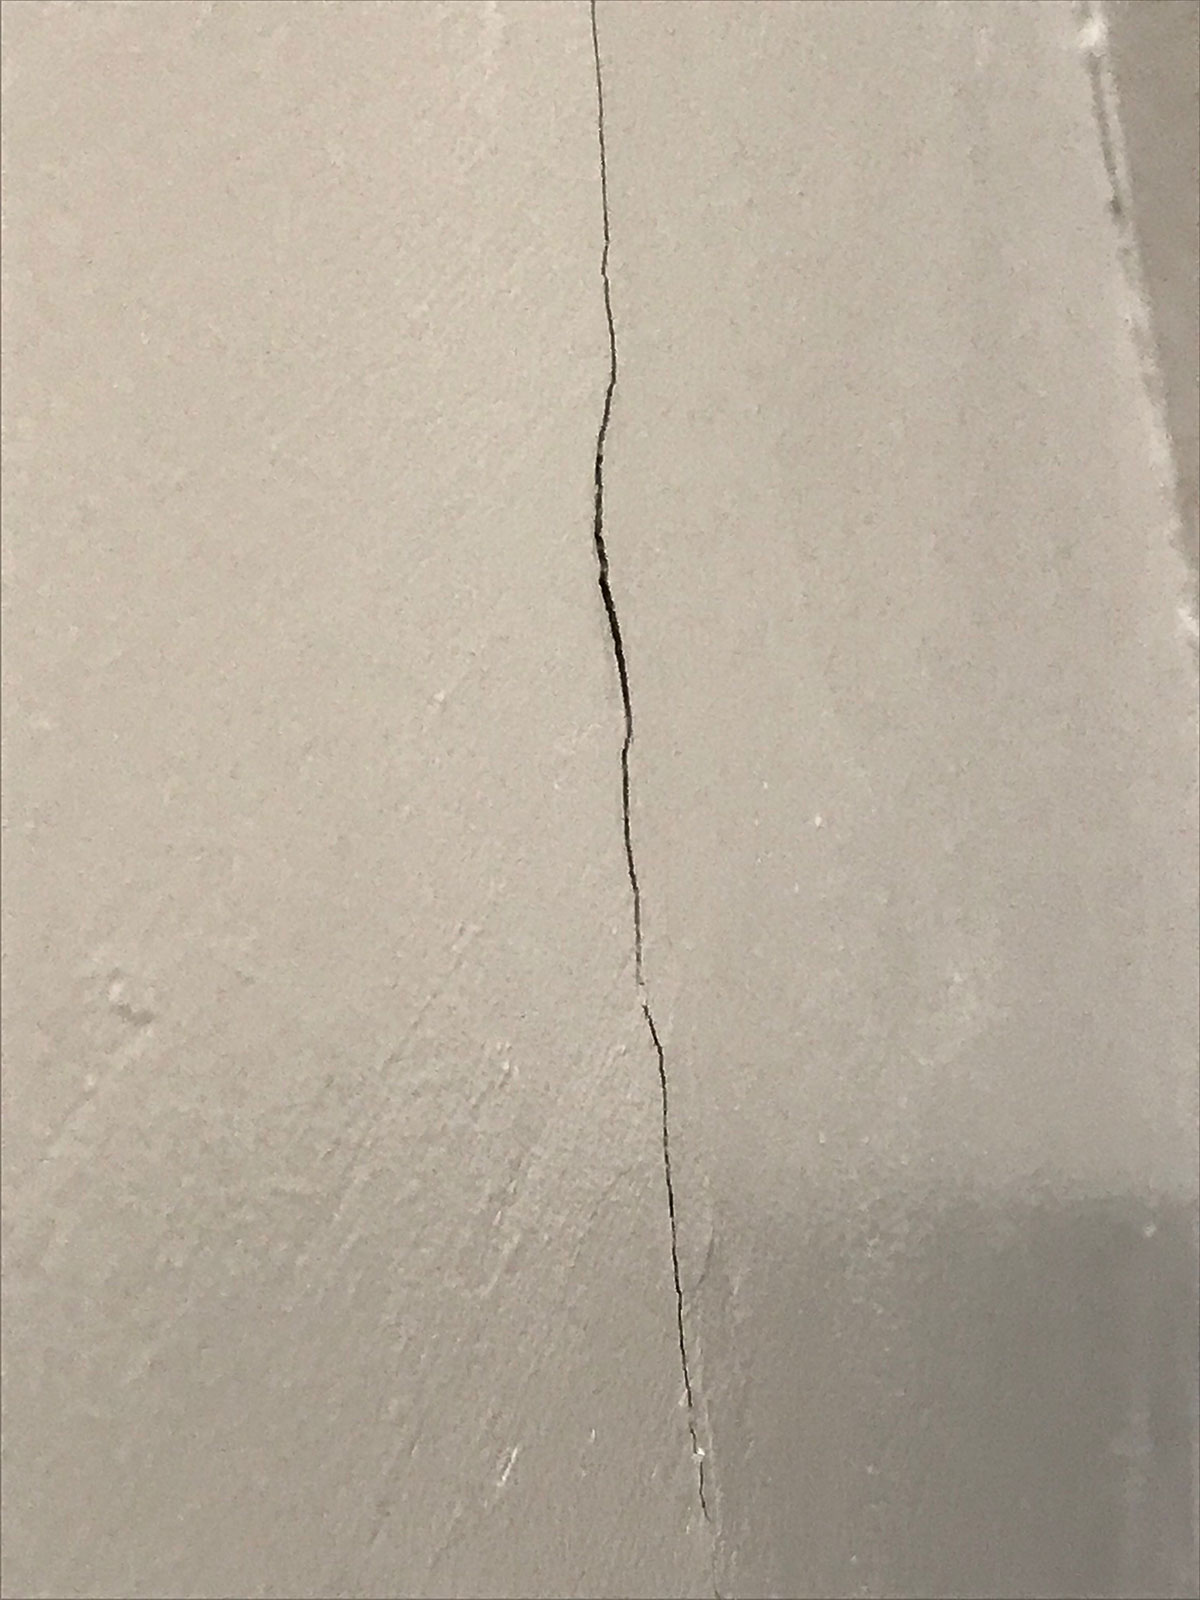 house paint cracks